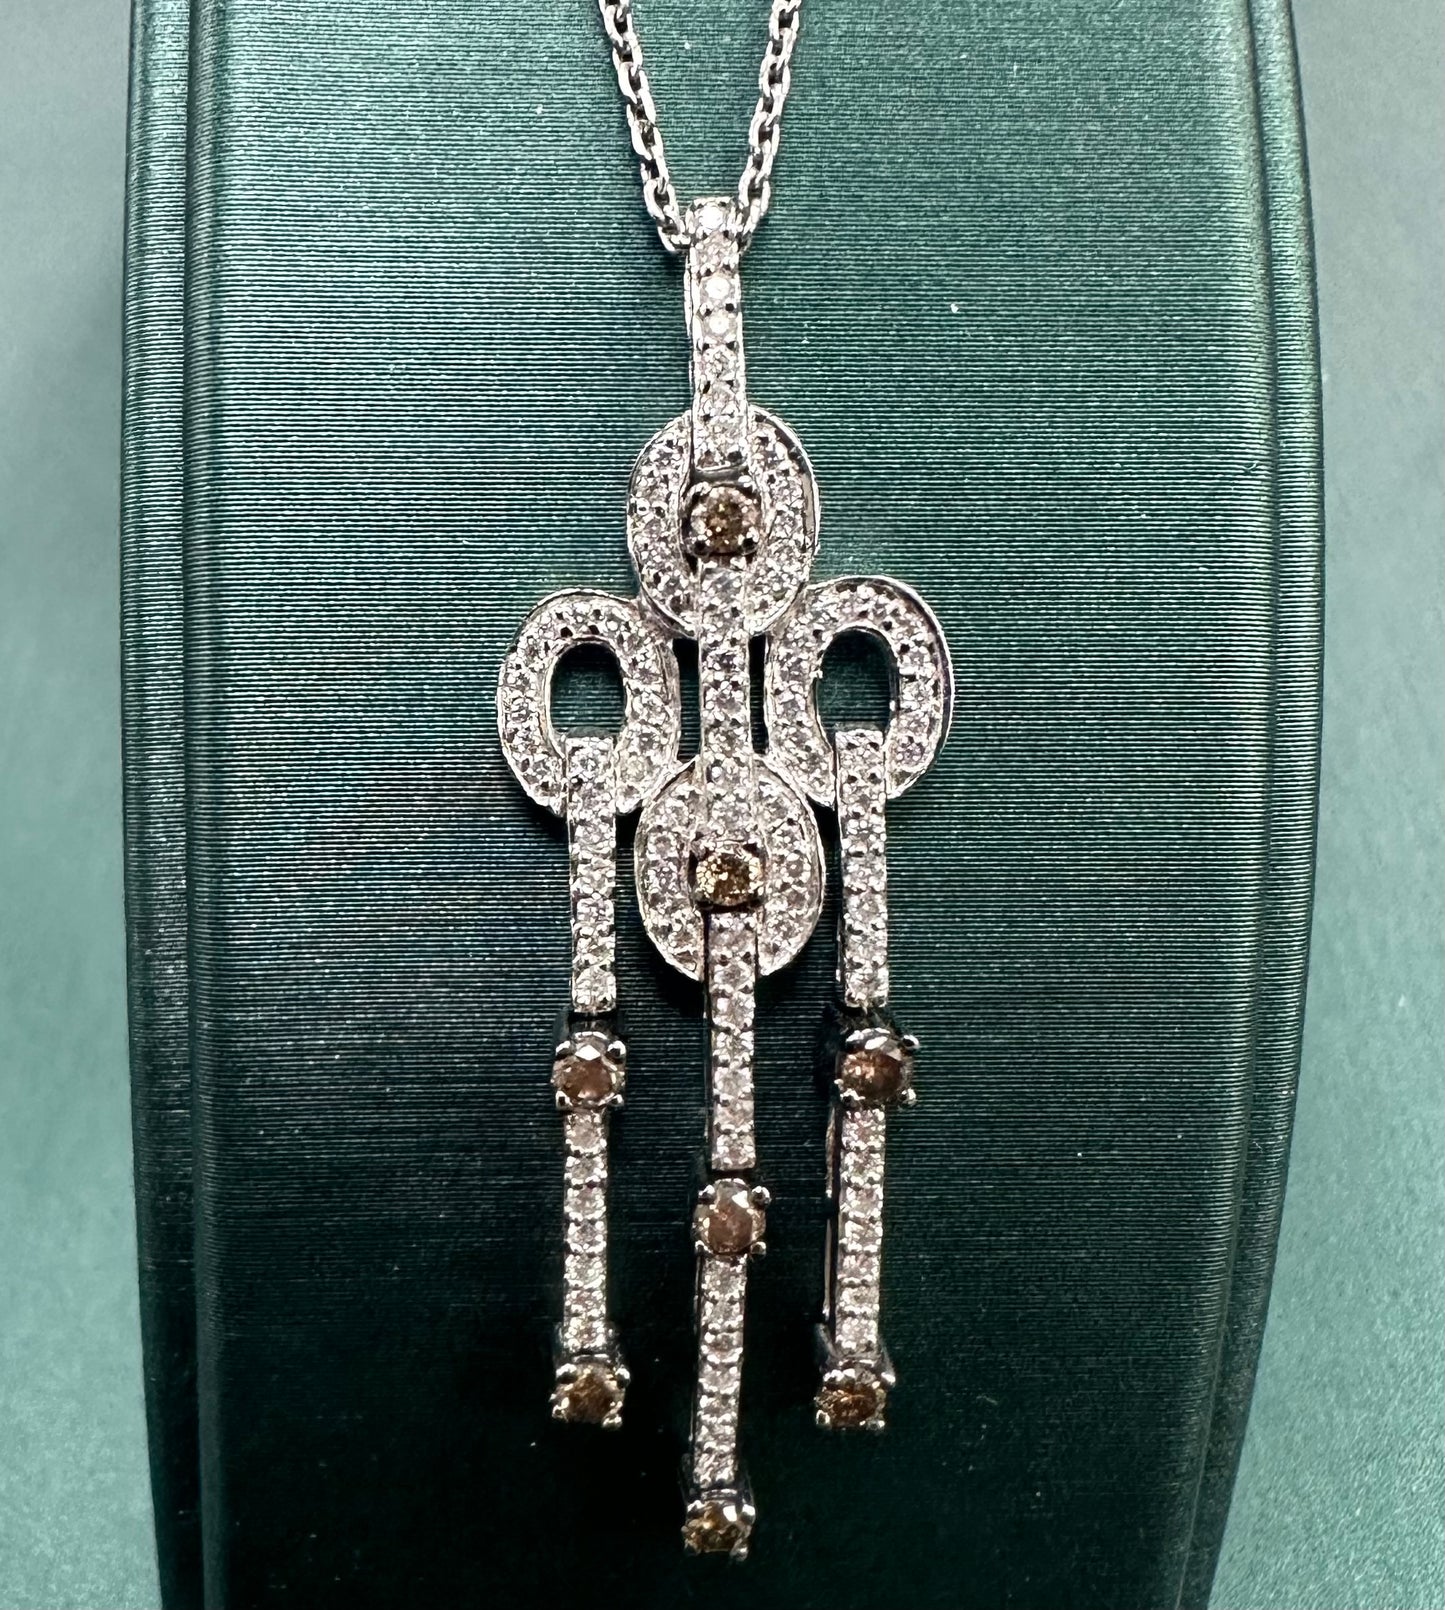 Diamond drops necklace